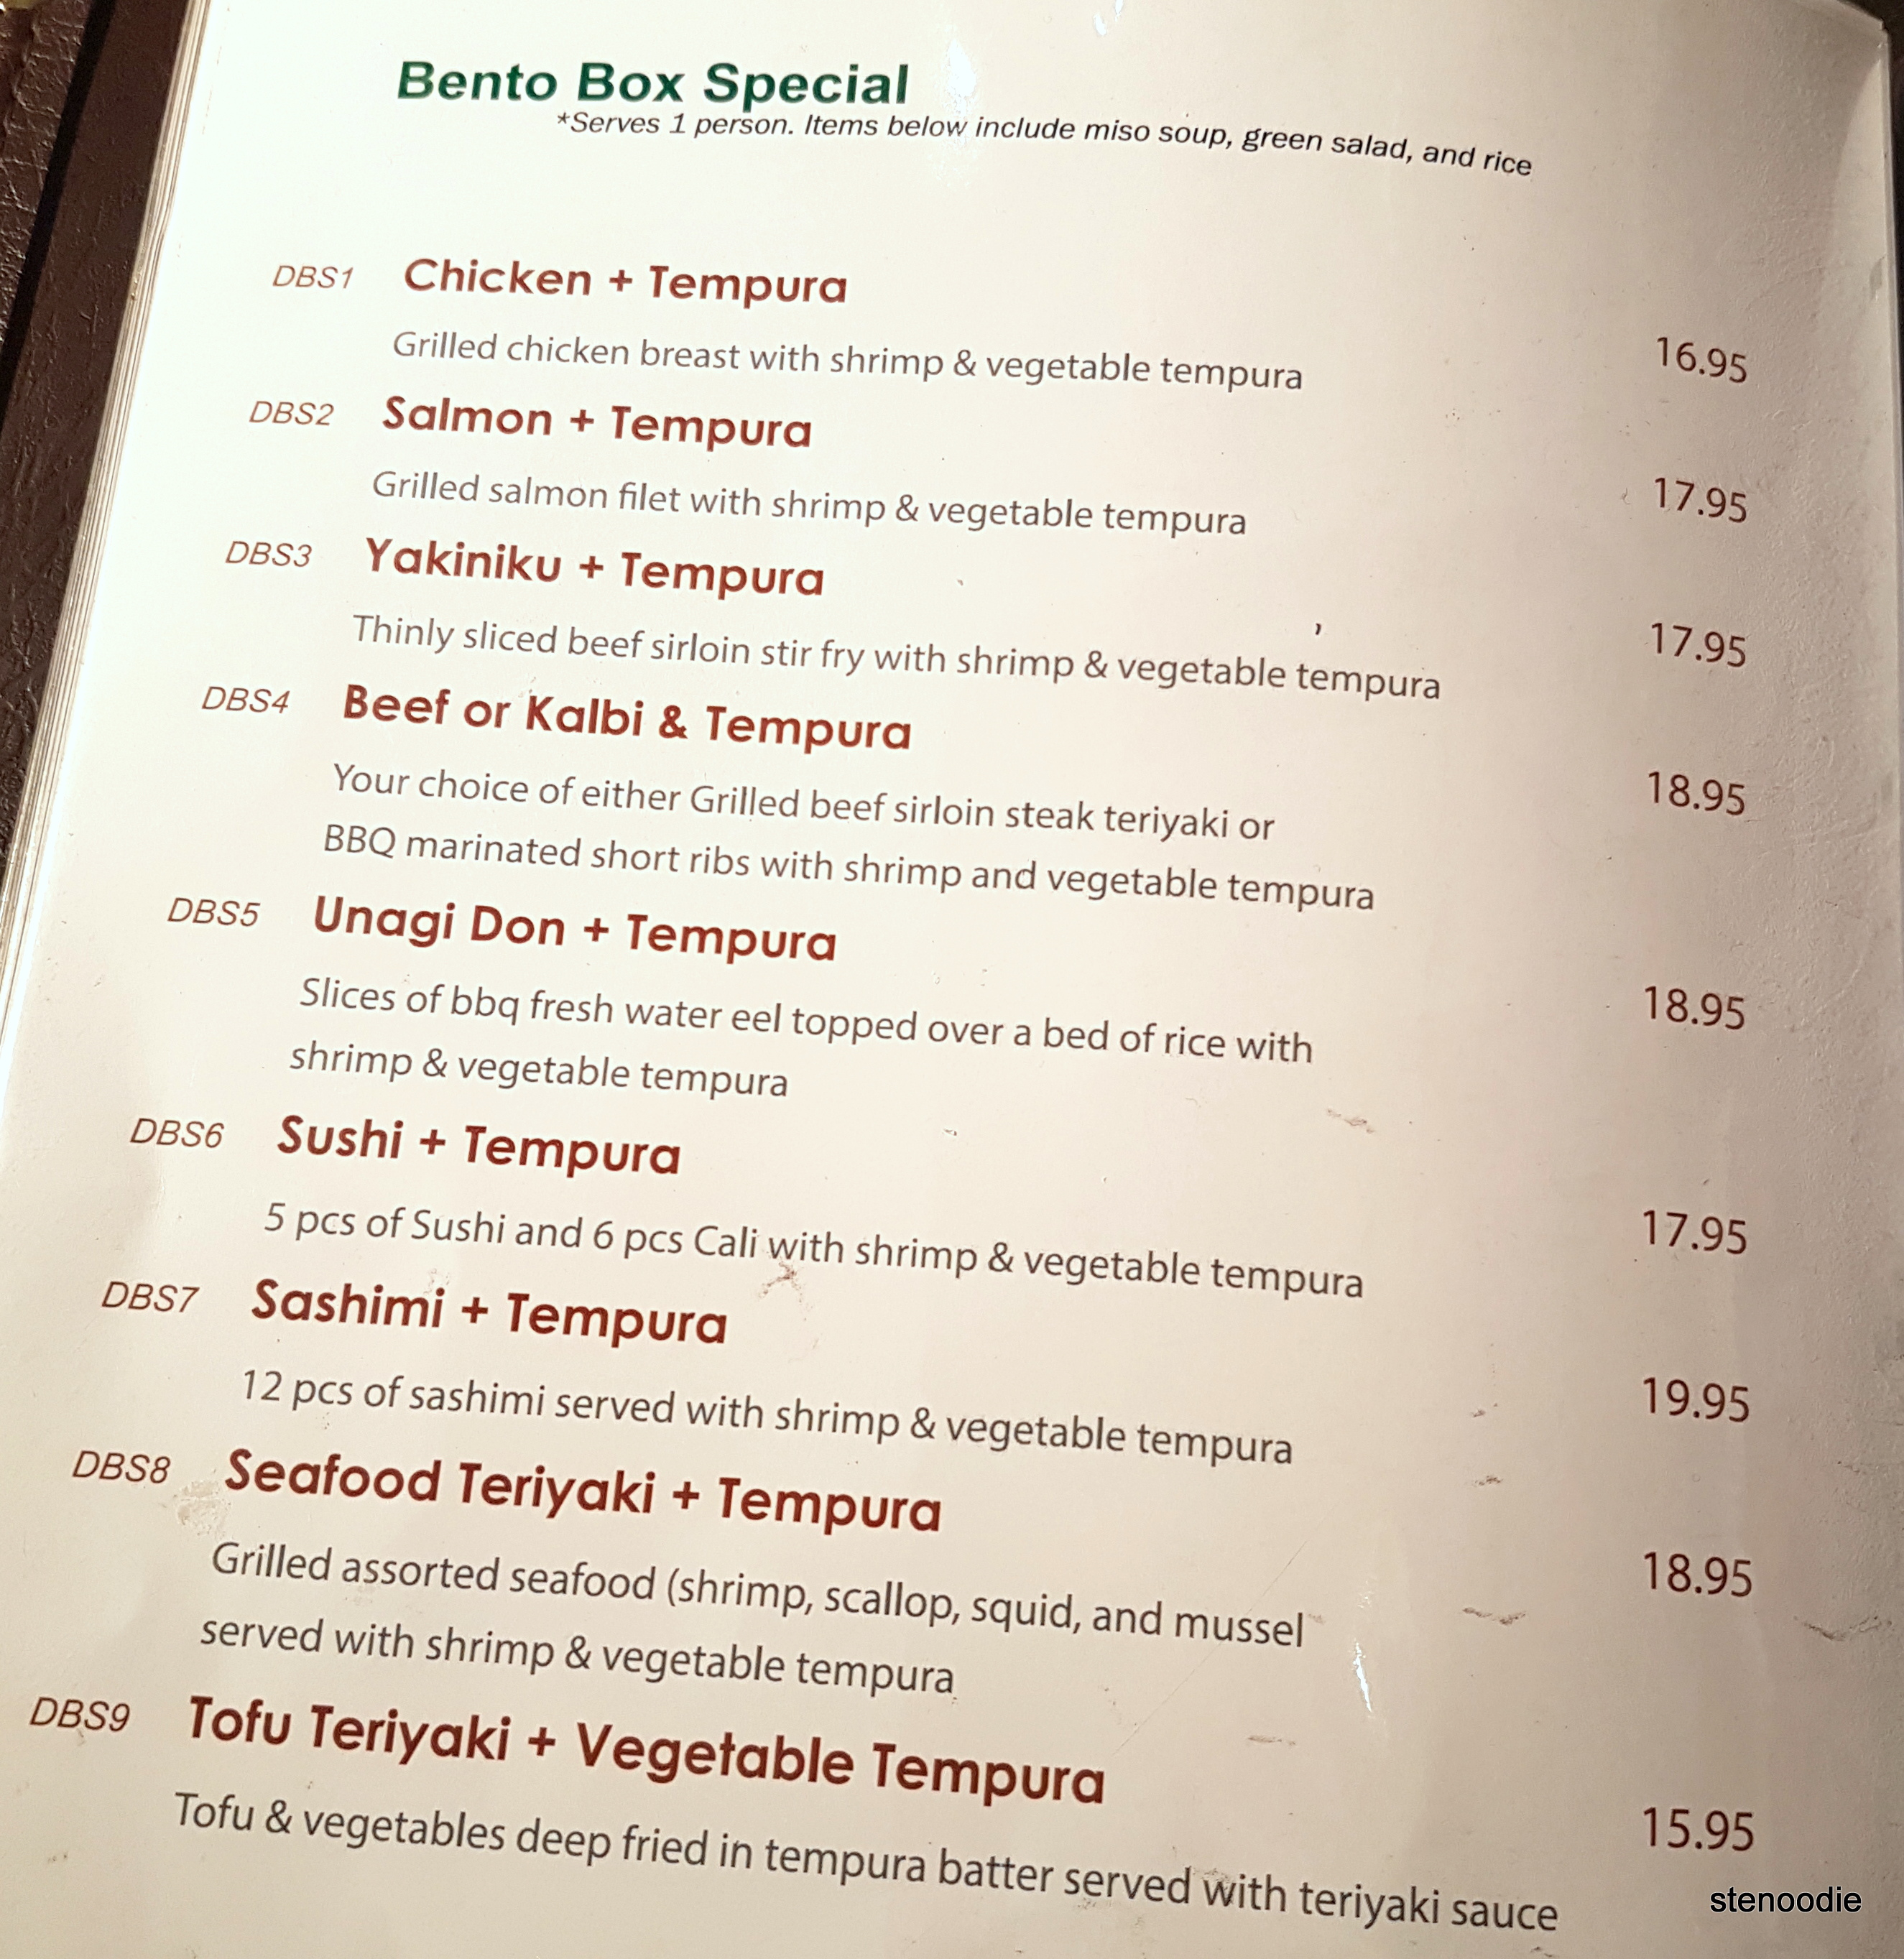  Hamaru Sushi menu and prices